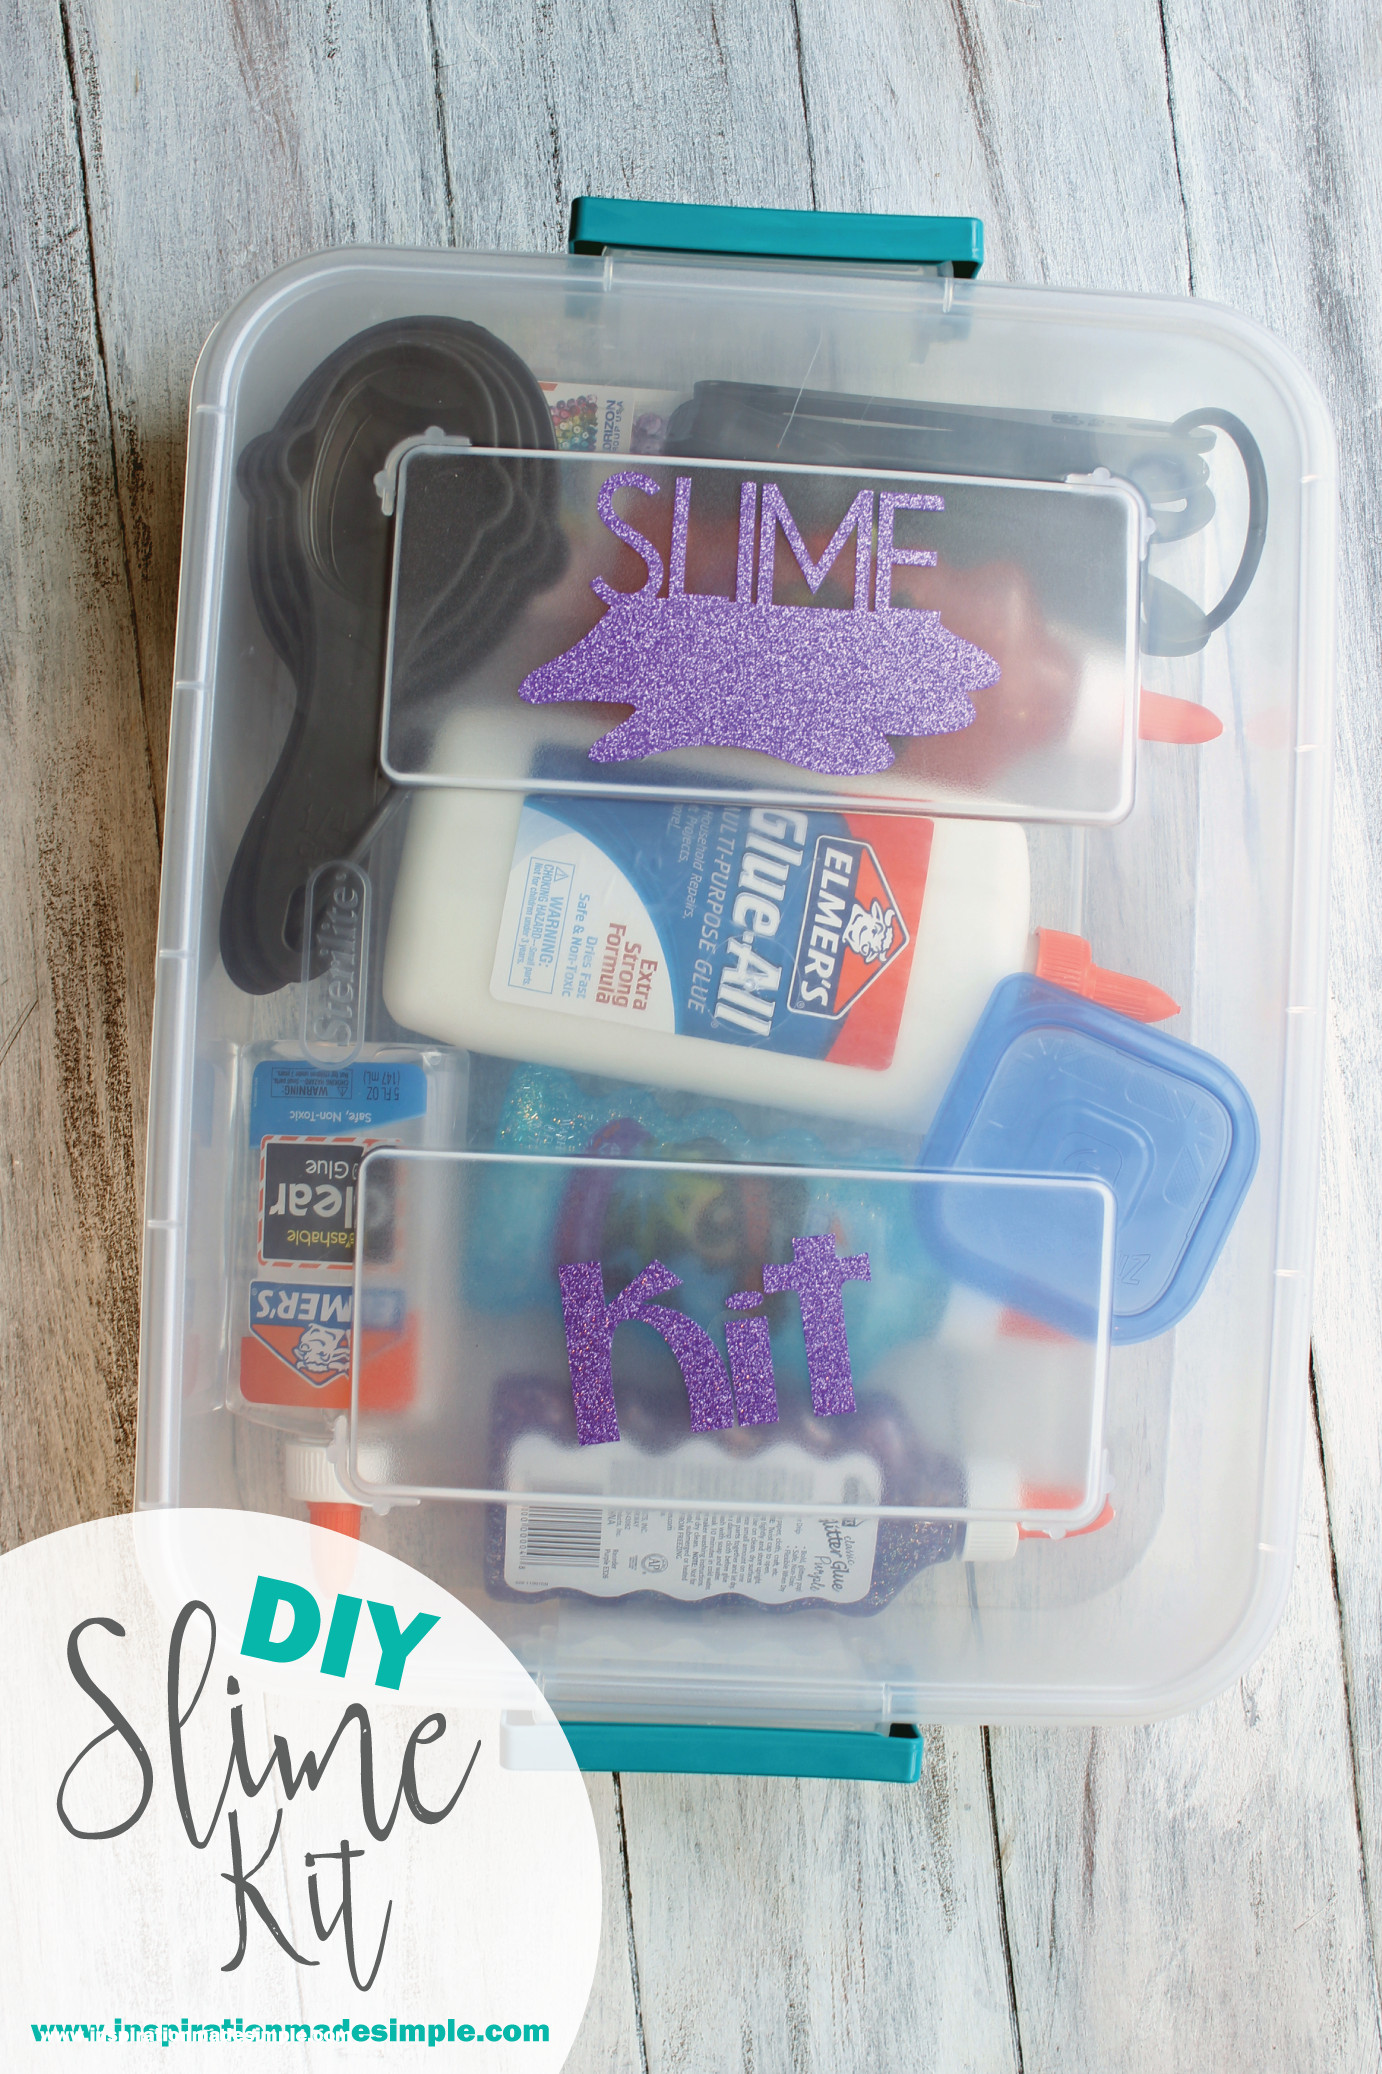 Slime Kit DIY
 DIY Slime Kit Inspiration Made Simple